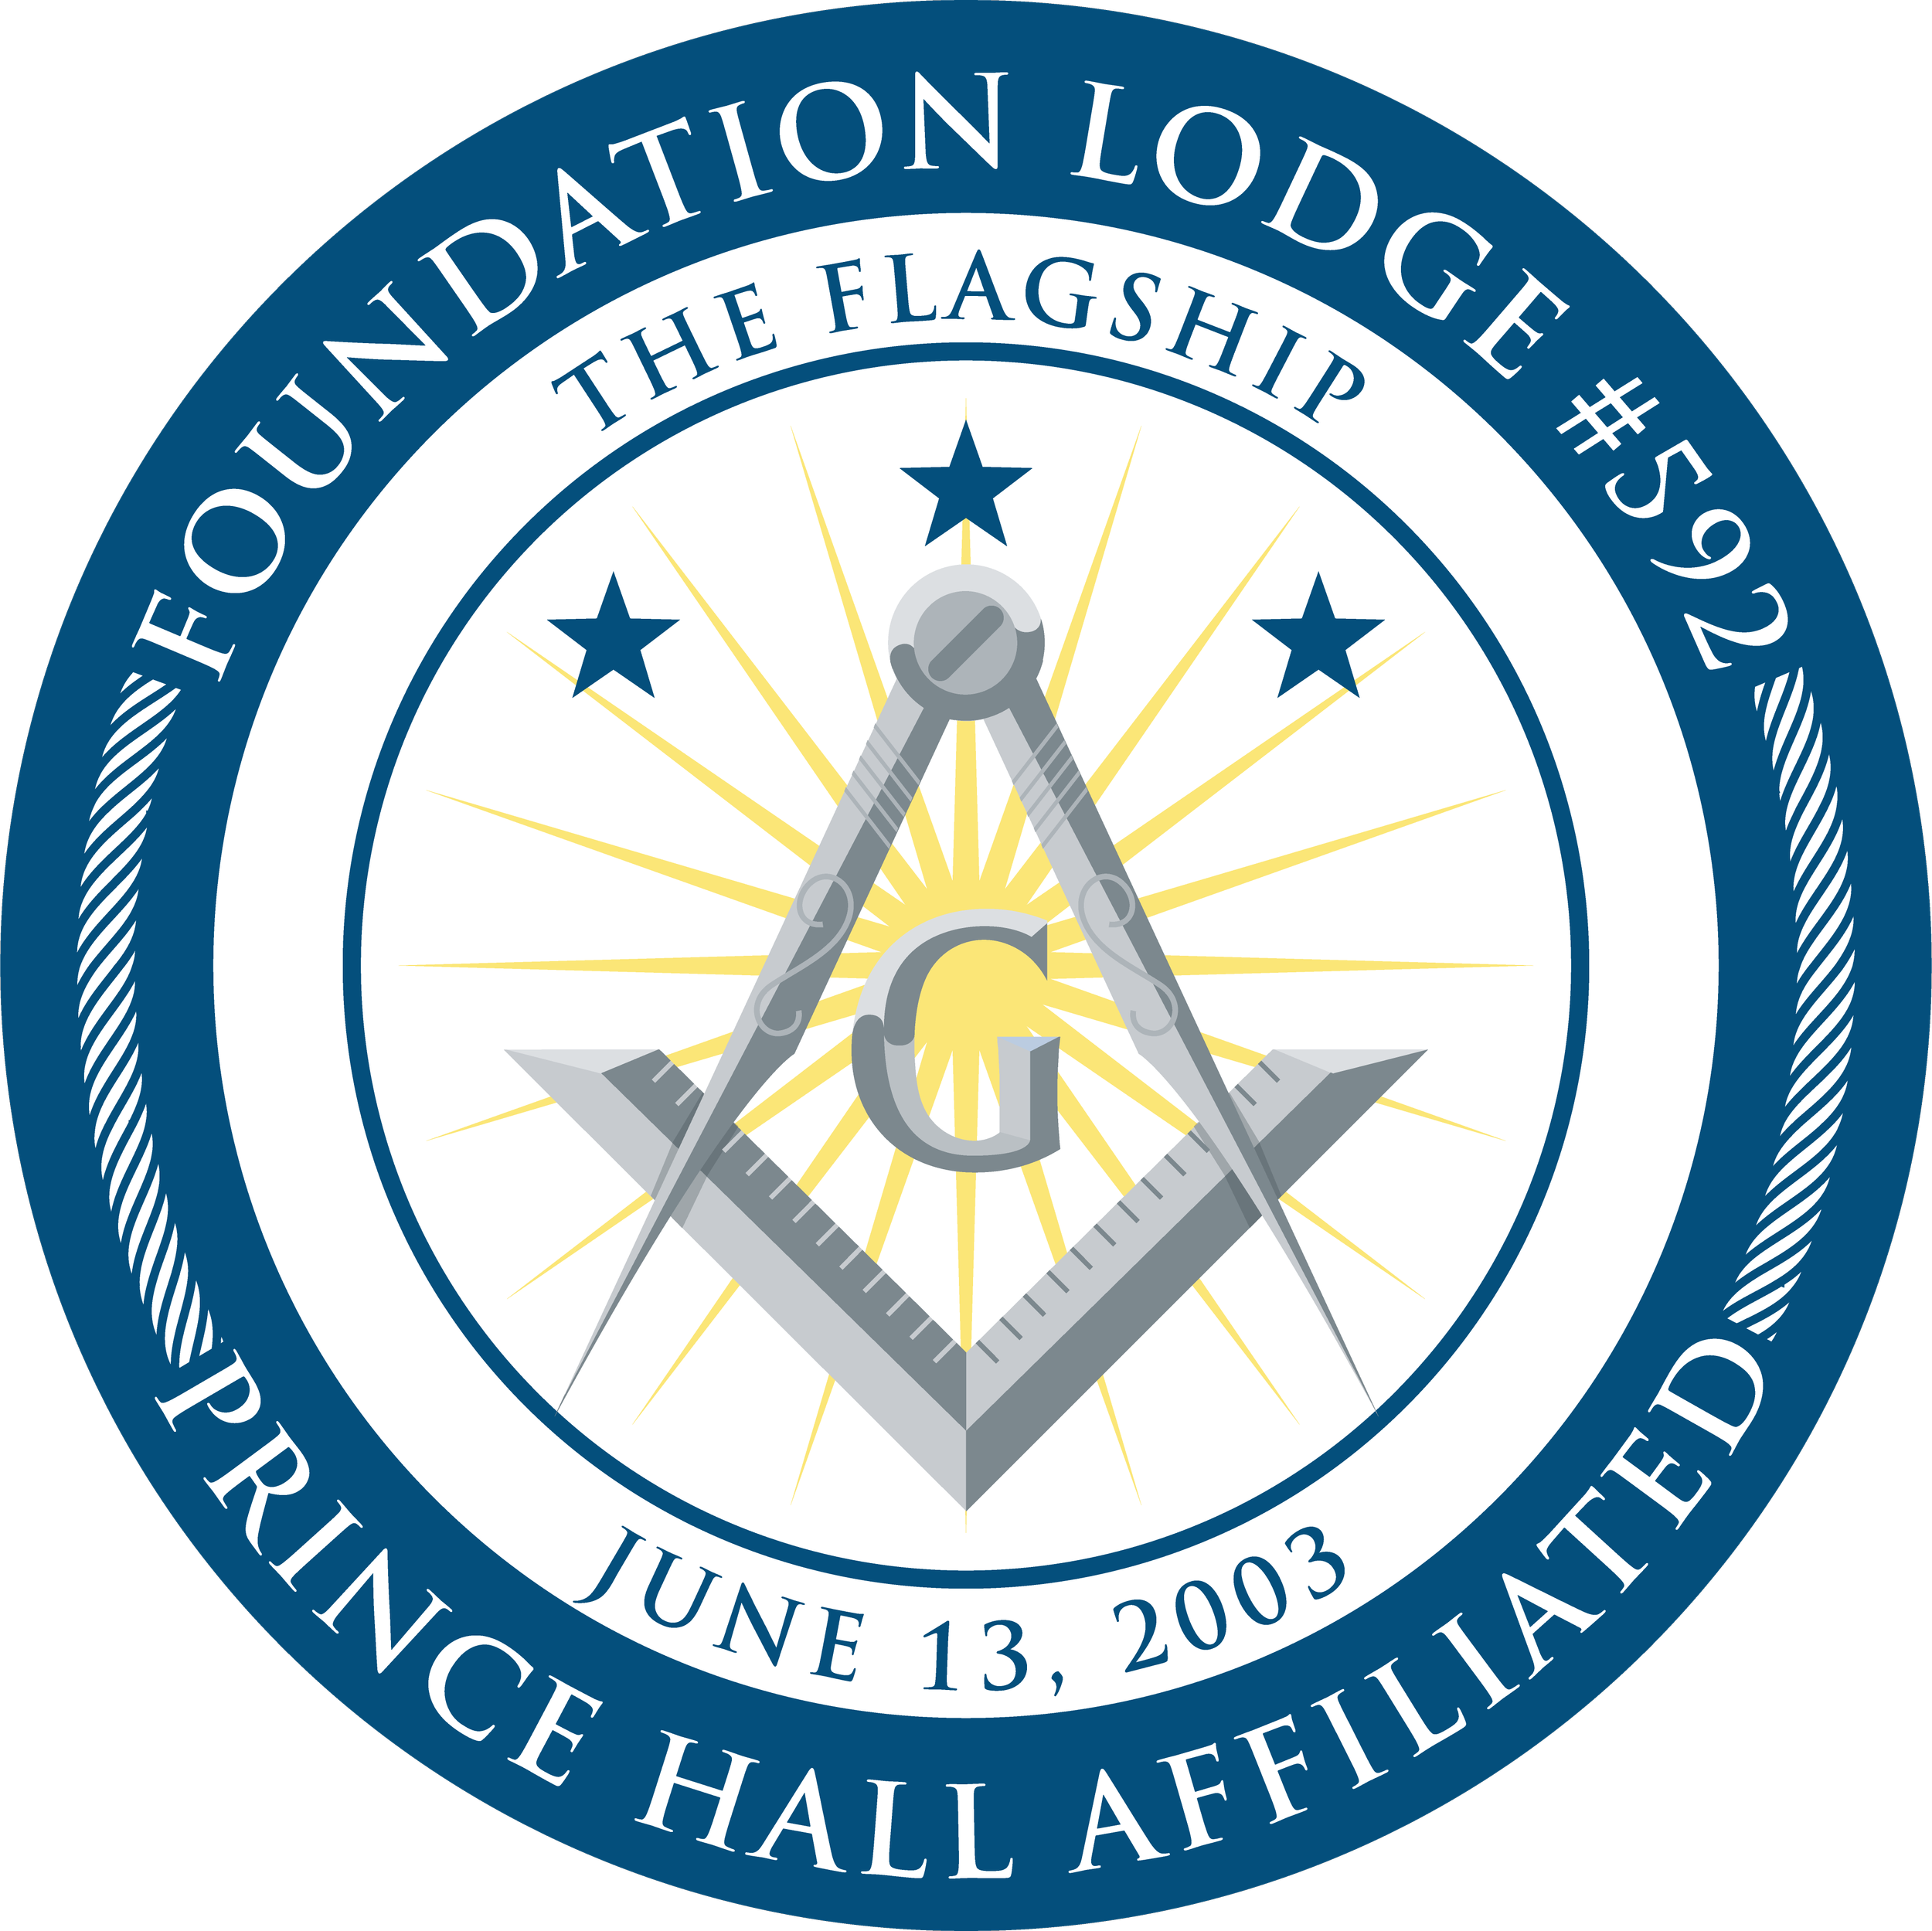 Foundation Lodge #592